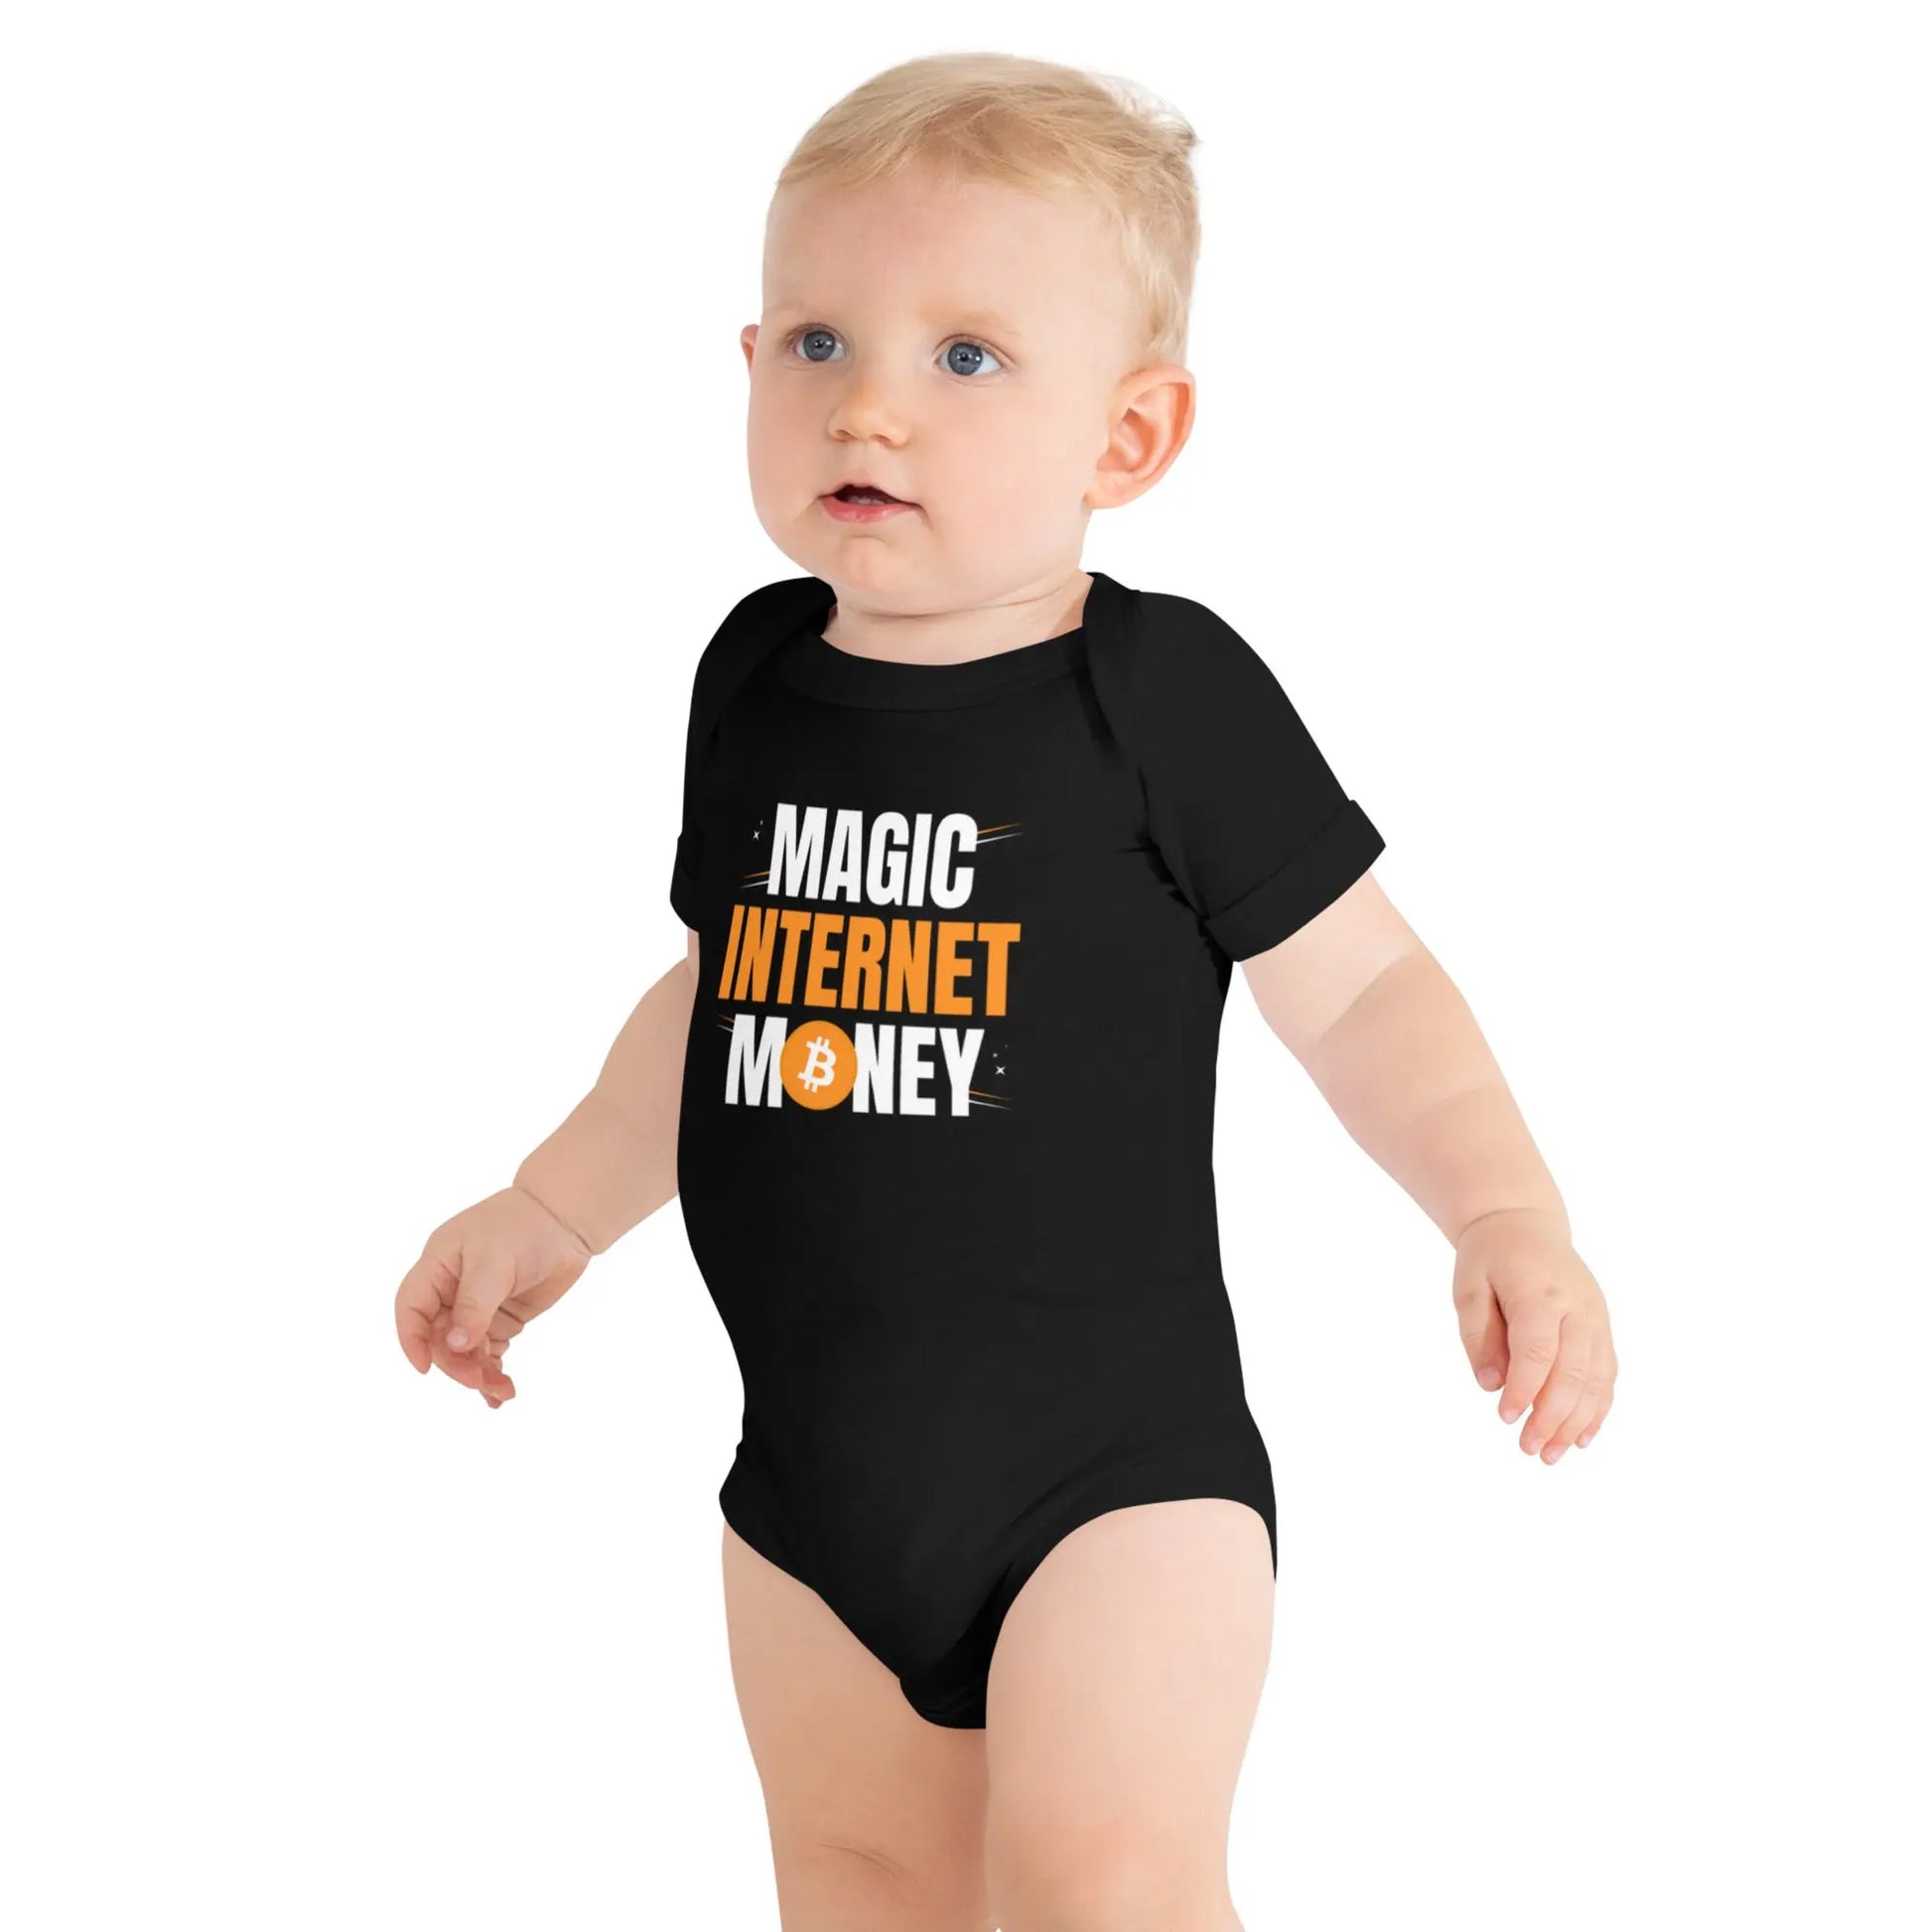 Magic Internet Money - Baby Bitcoin Body Suit Black